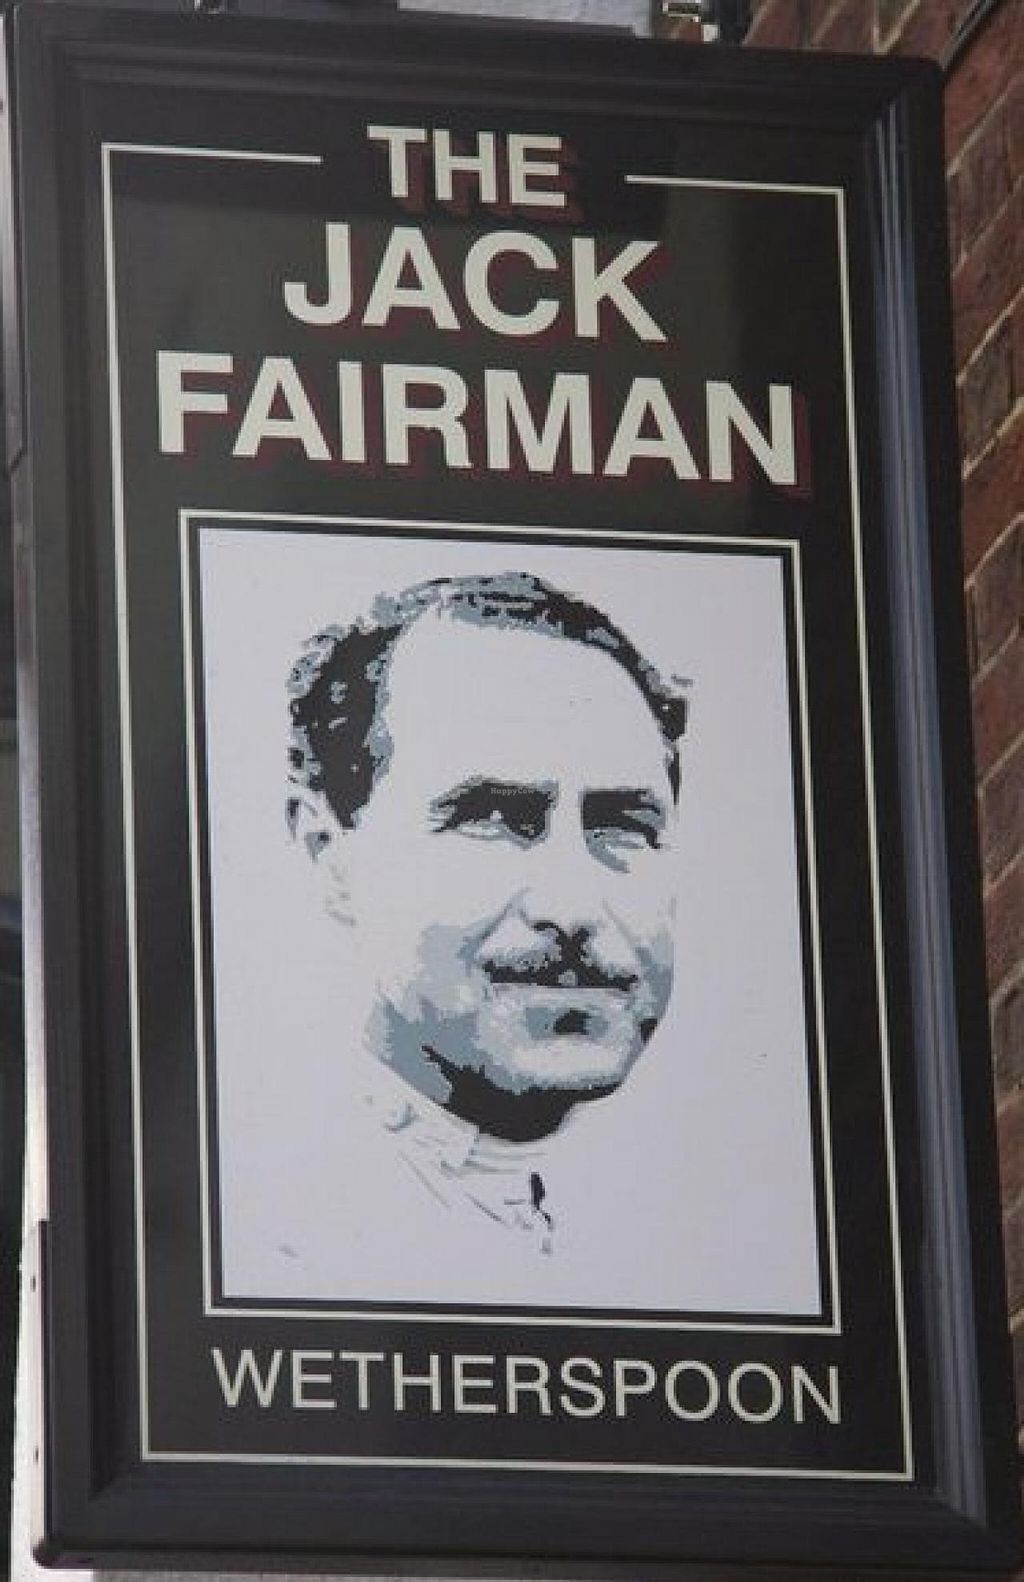 The Jack Fairman Public House